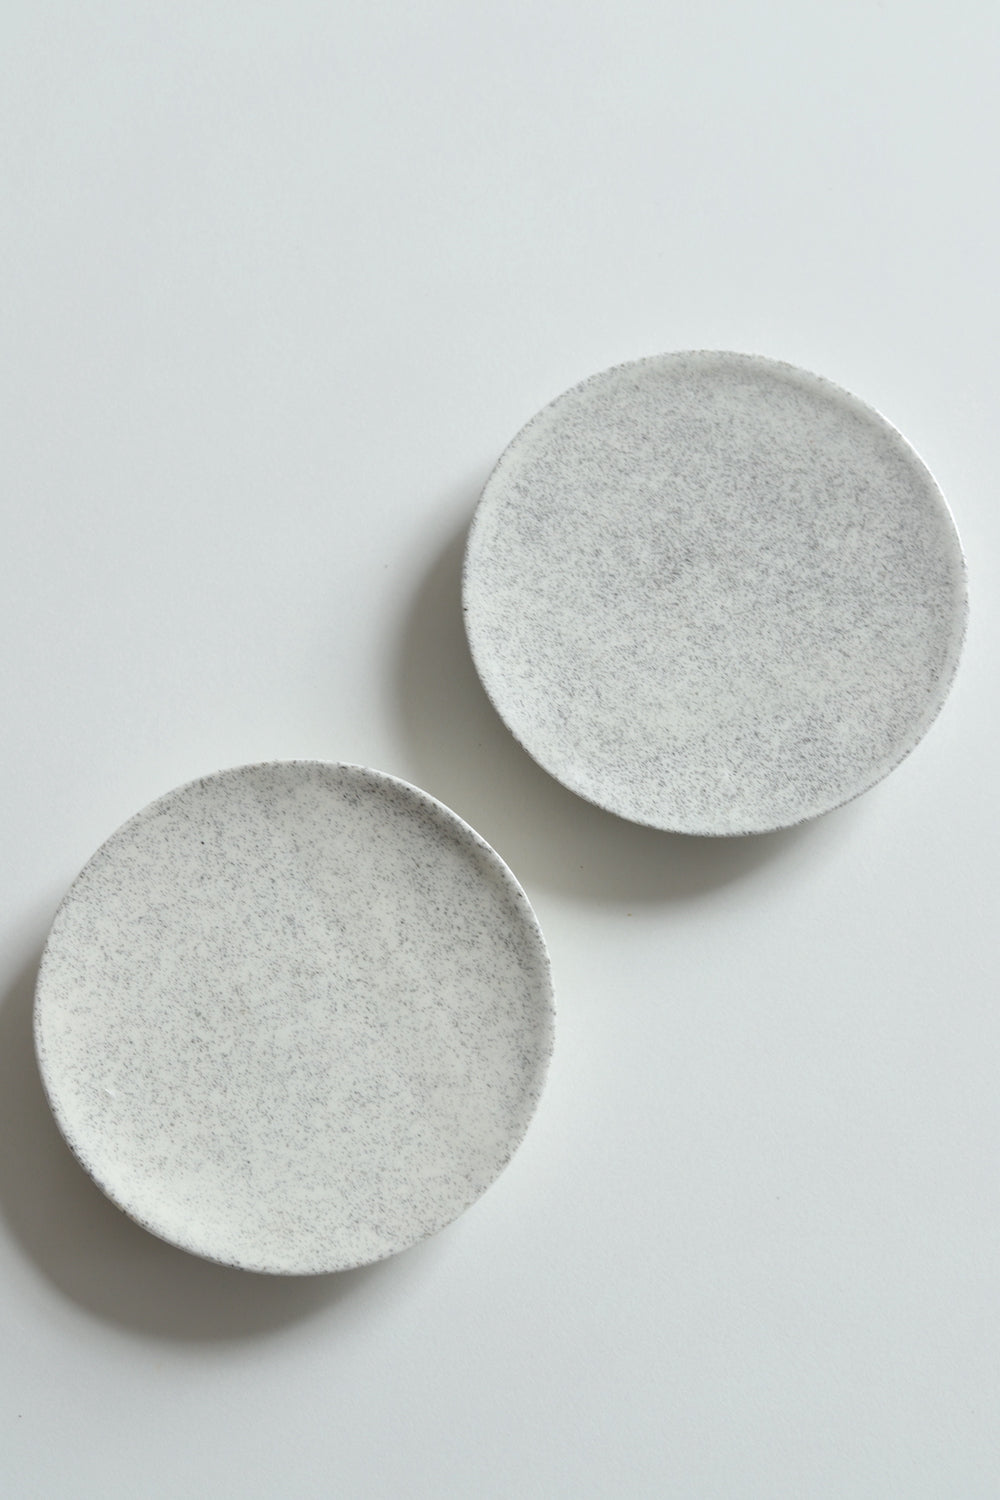 Two artisan ceramic small plates, app 8cm